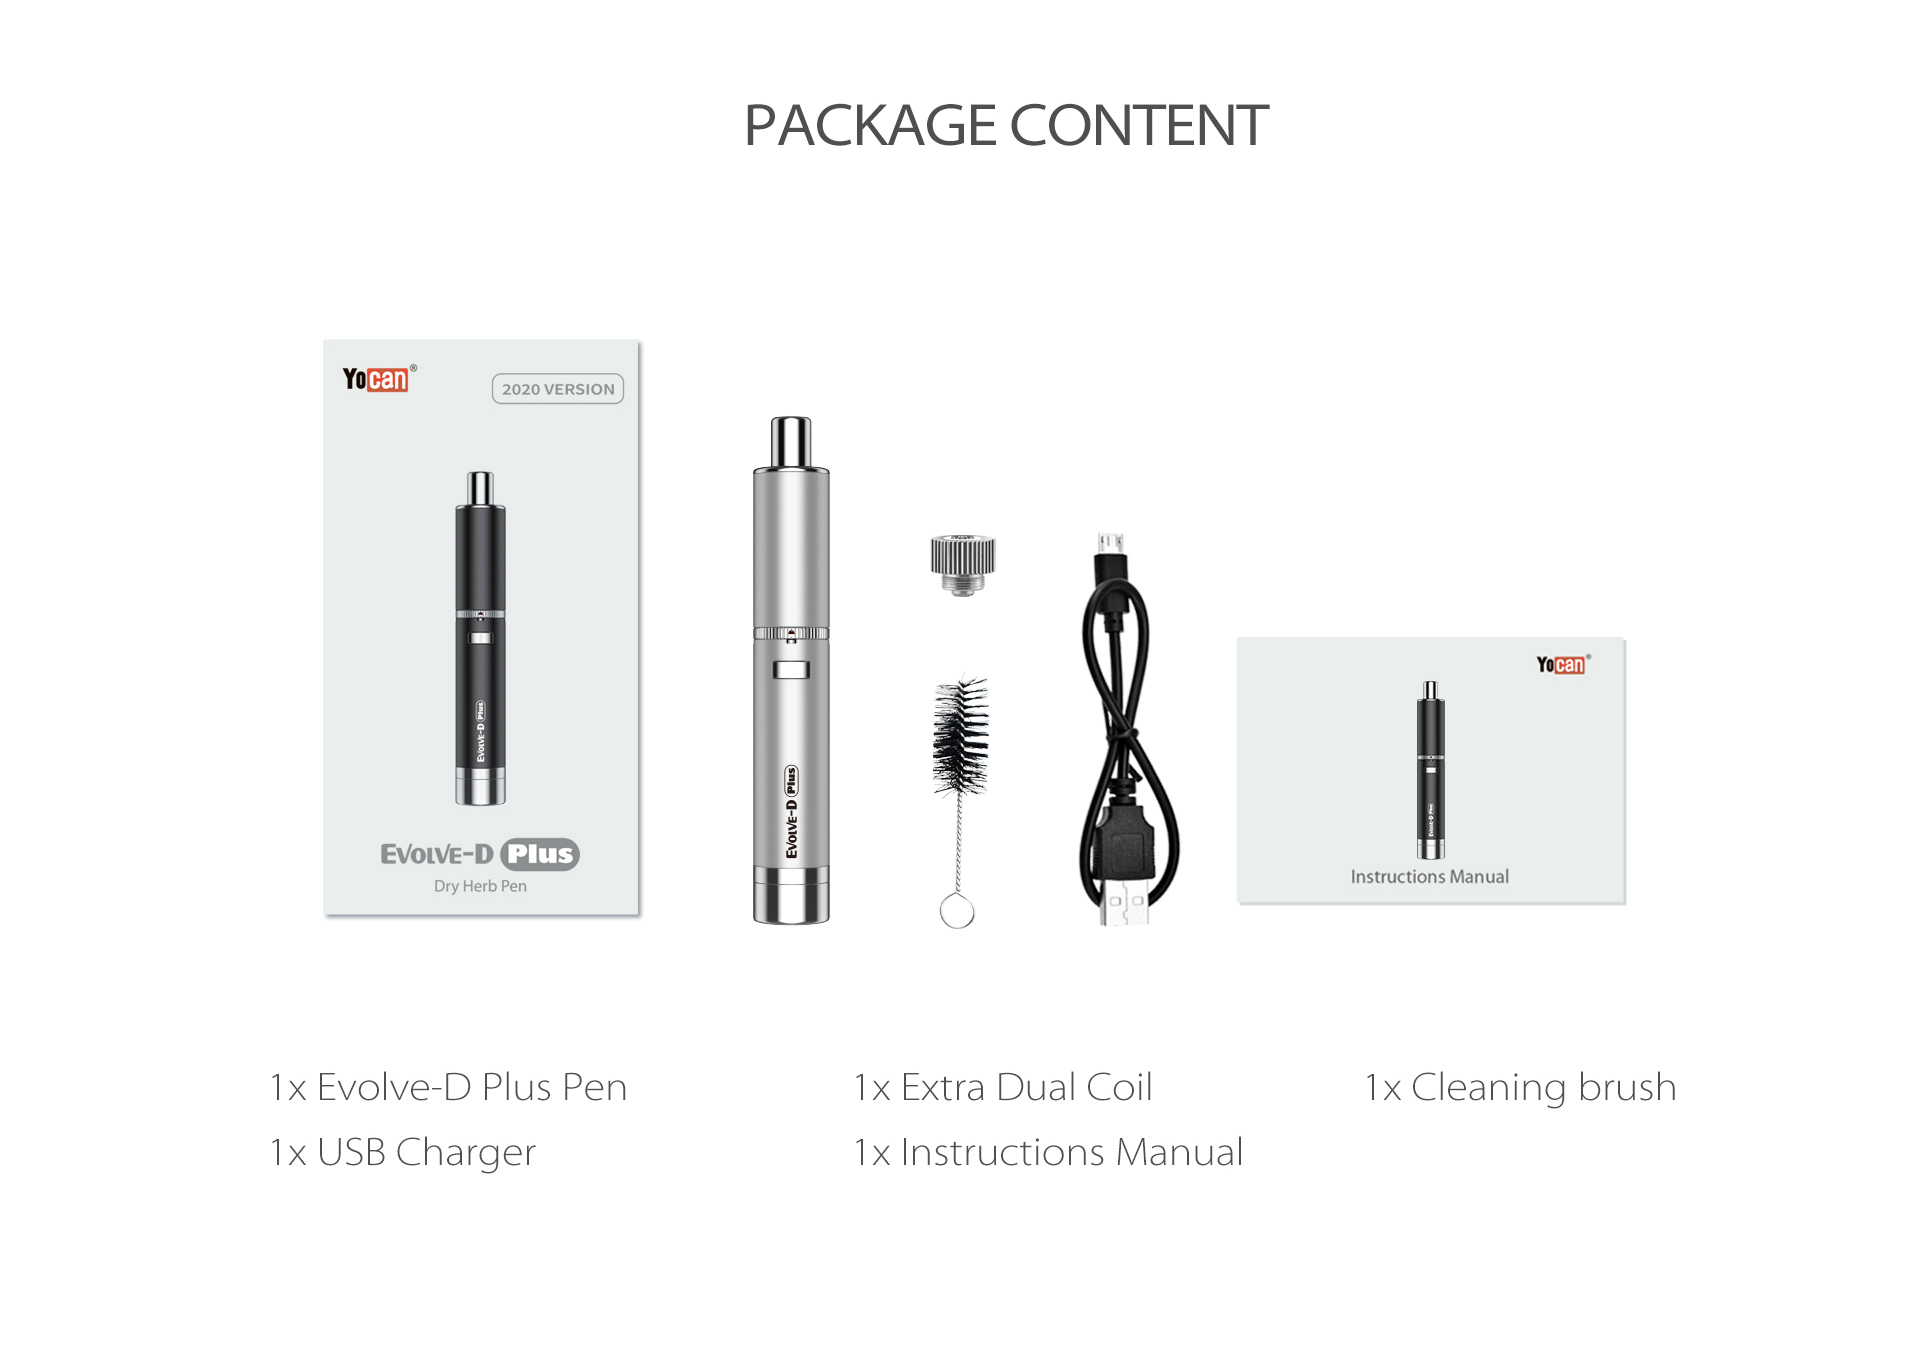 The package content of Yocan Evolve-D Plus vaporizer pen 2020 version.